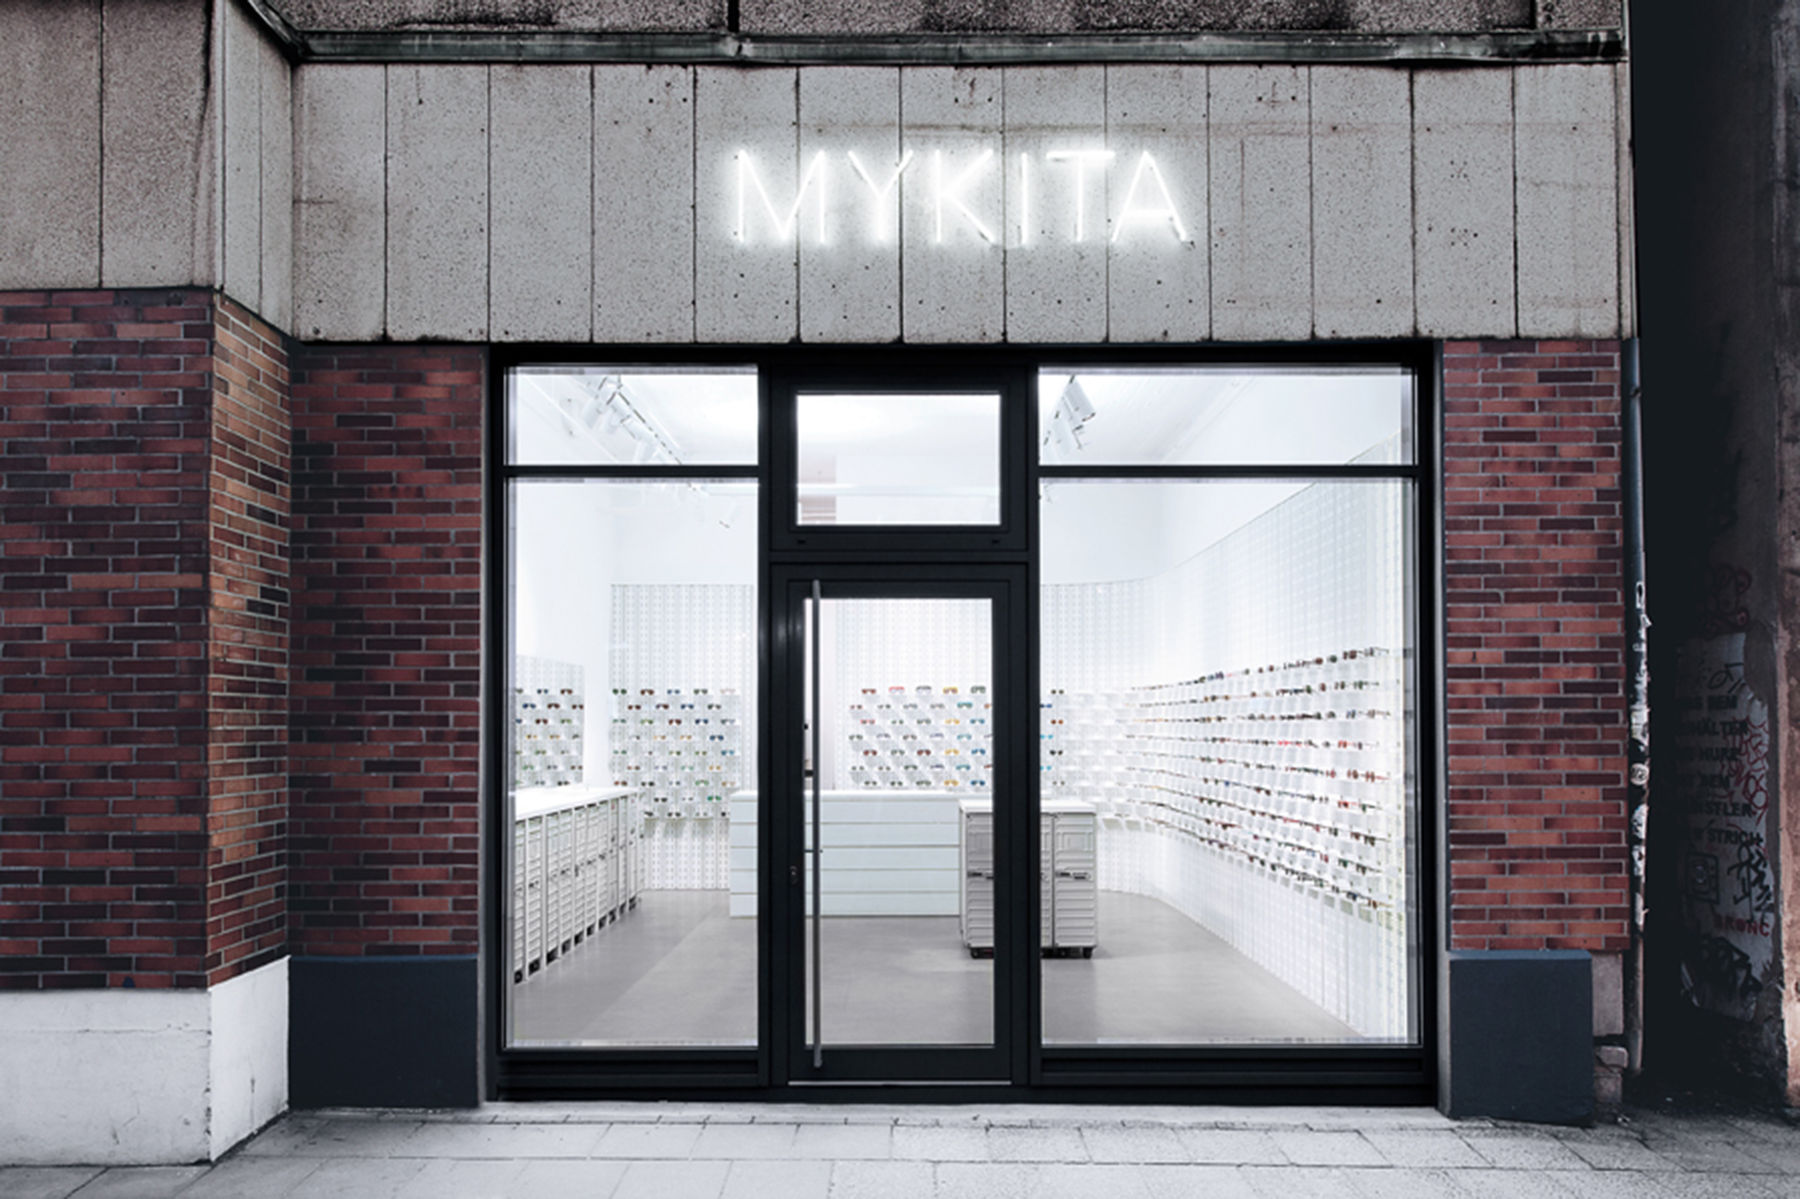 MYKITA® Shop - Opticians, Glasses & Sunglasses in Berlin-Mitte